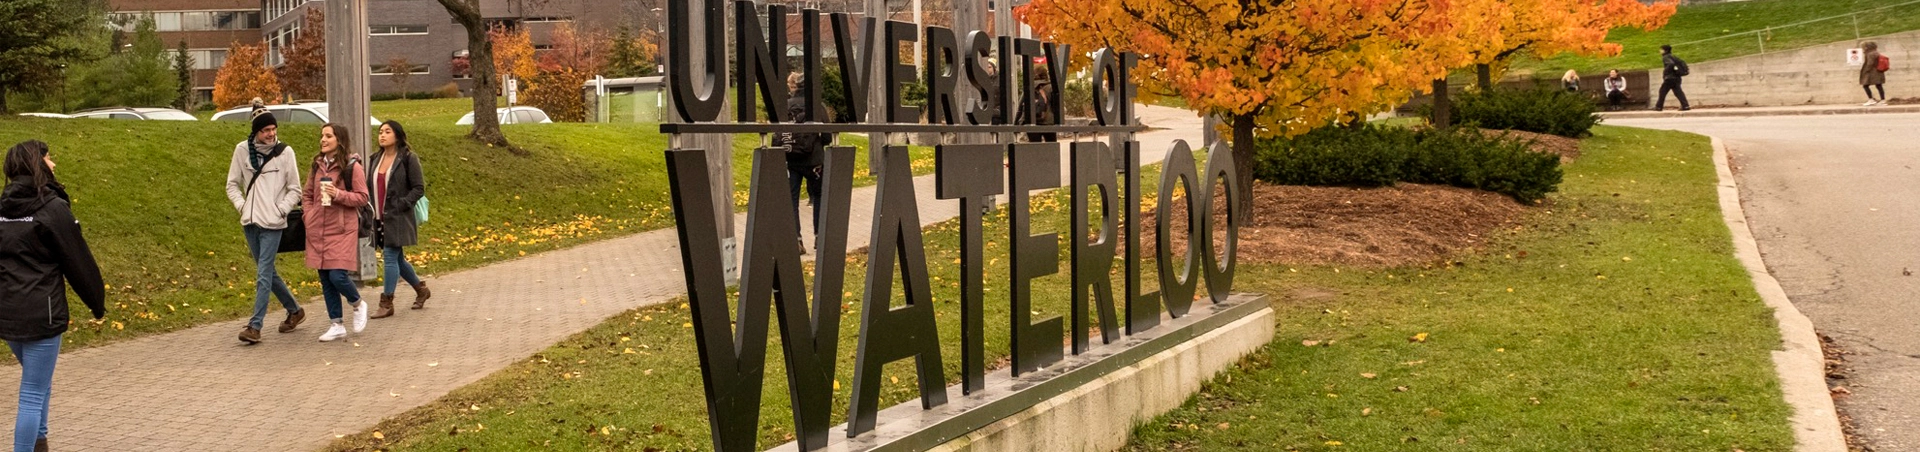 University of Waterloo Campus